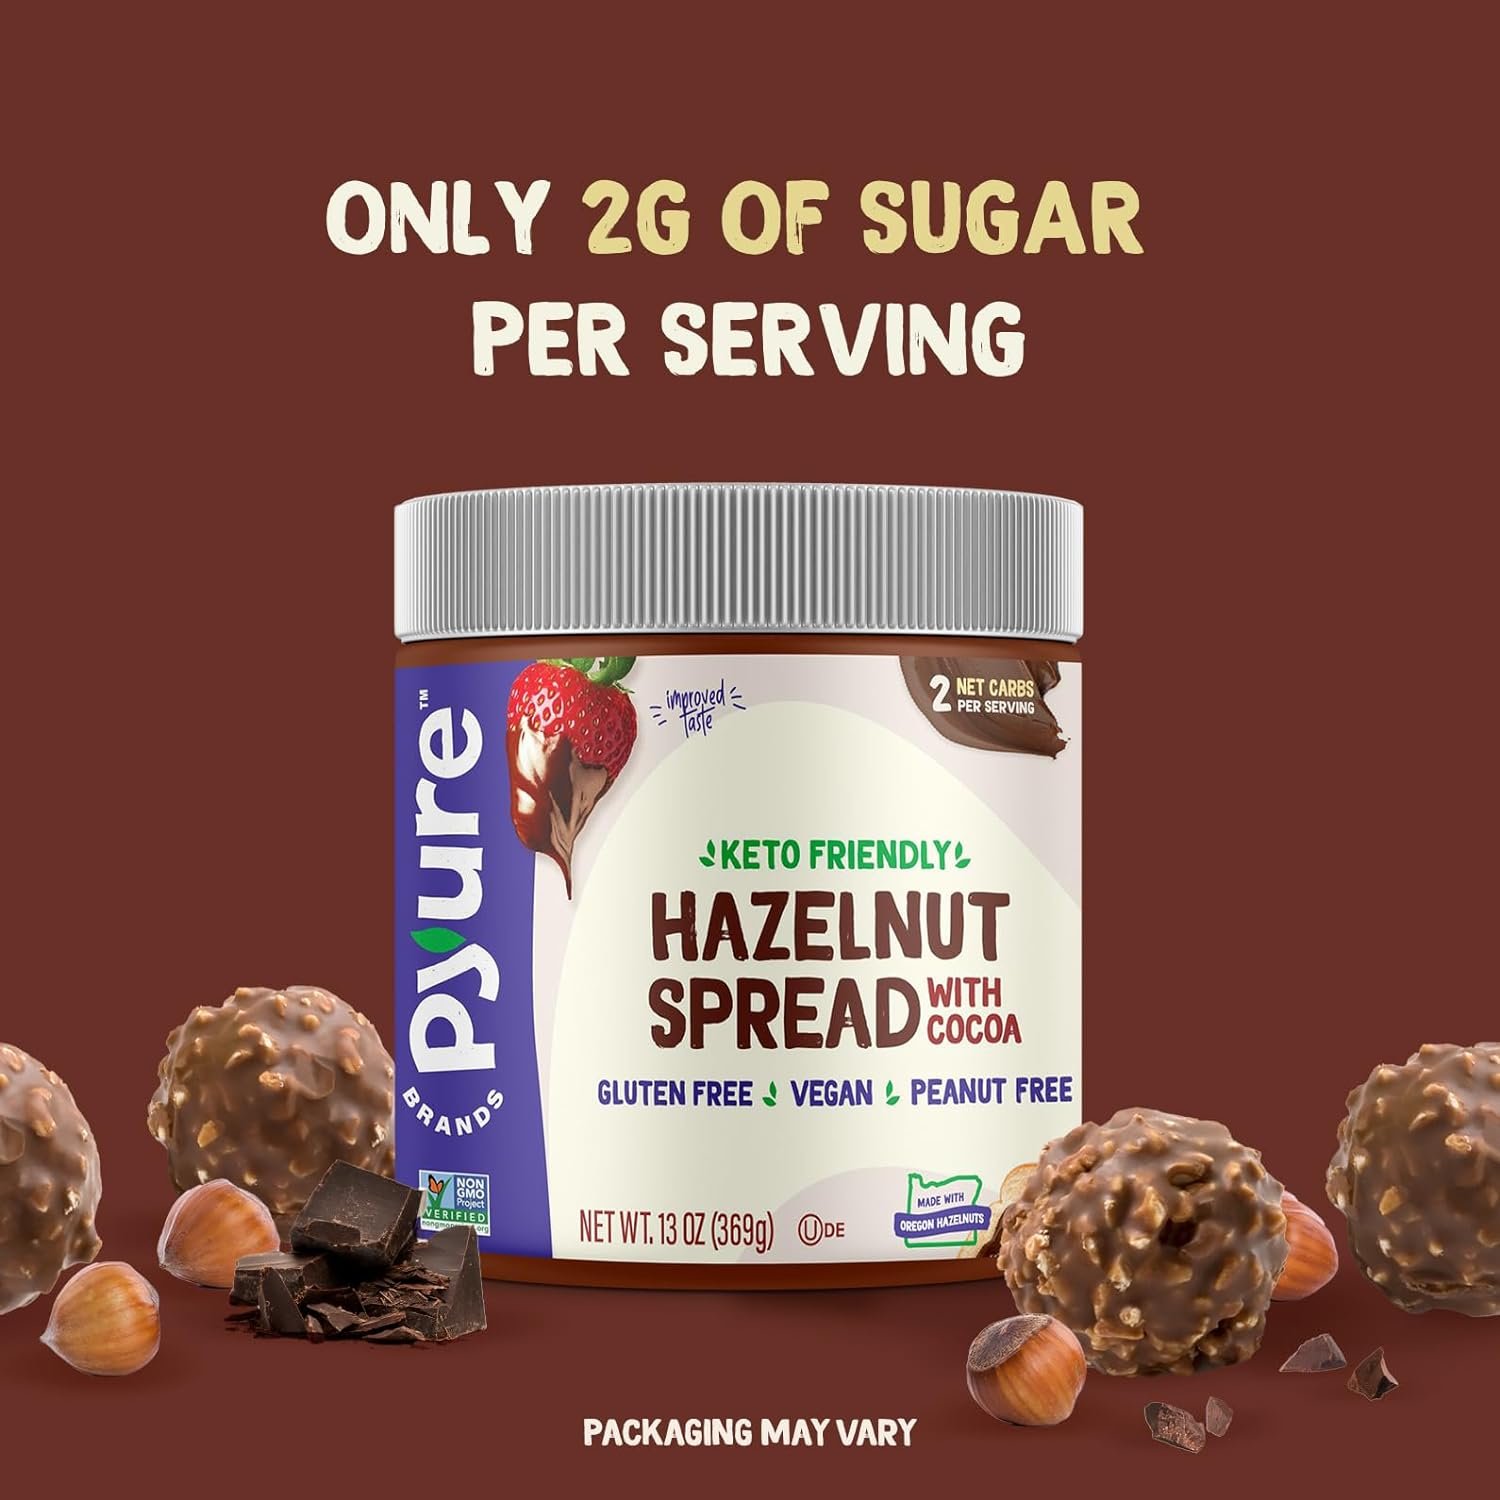 Pyure Hazelnut Spread with Cocoa 2 Net Carbs Keto Snack Gluten-Free, Peanut Free, Plant-Based Hazelnut Spread for Vegan Keto Friendly Food, 13 Ounce (Pack of 1)